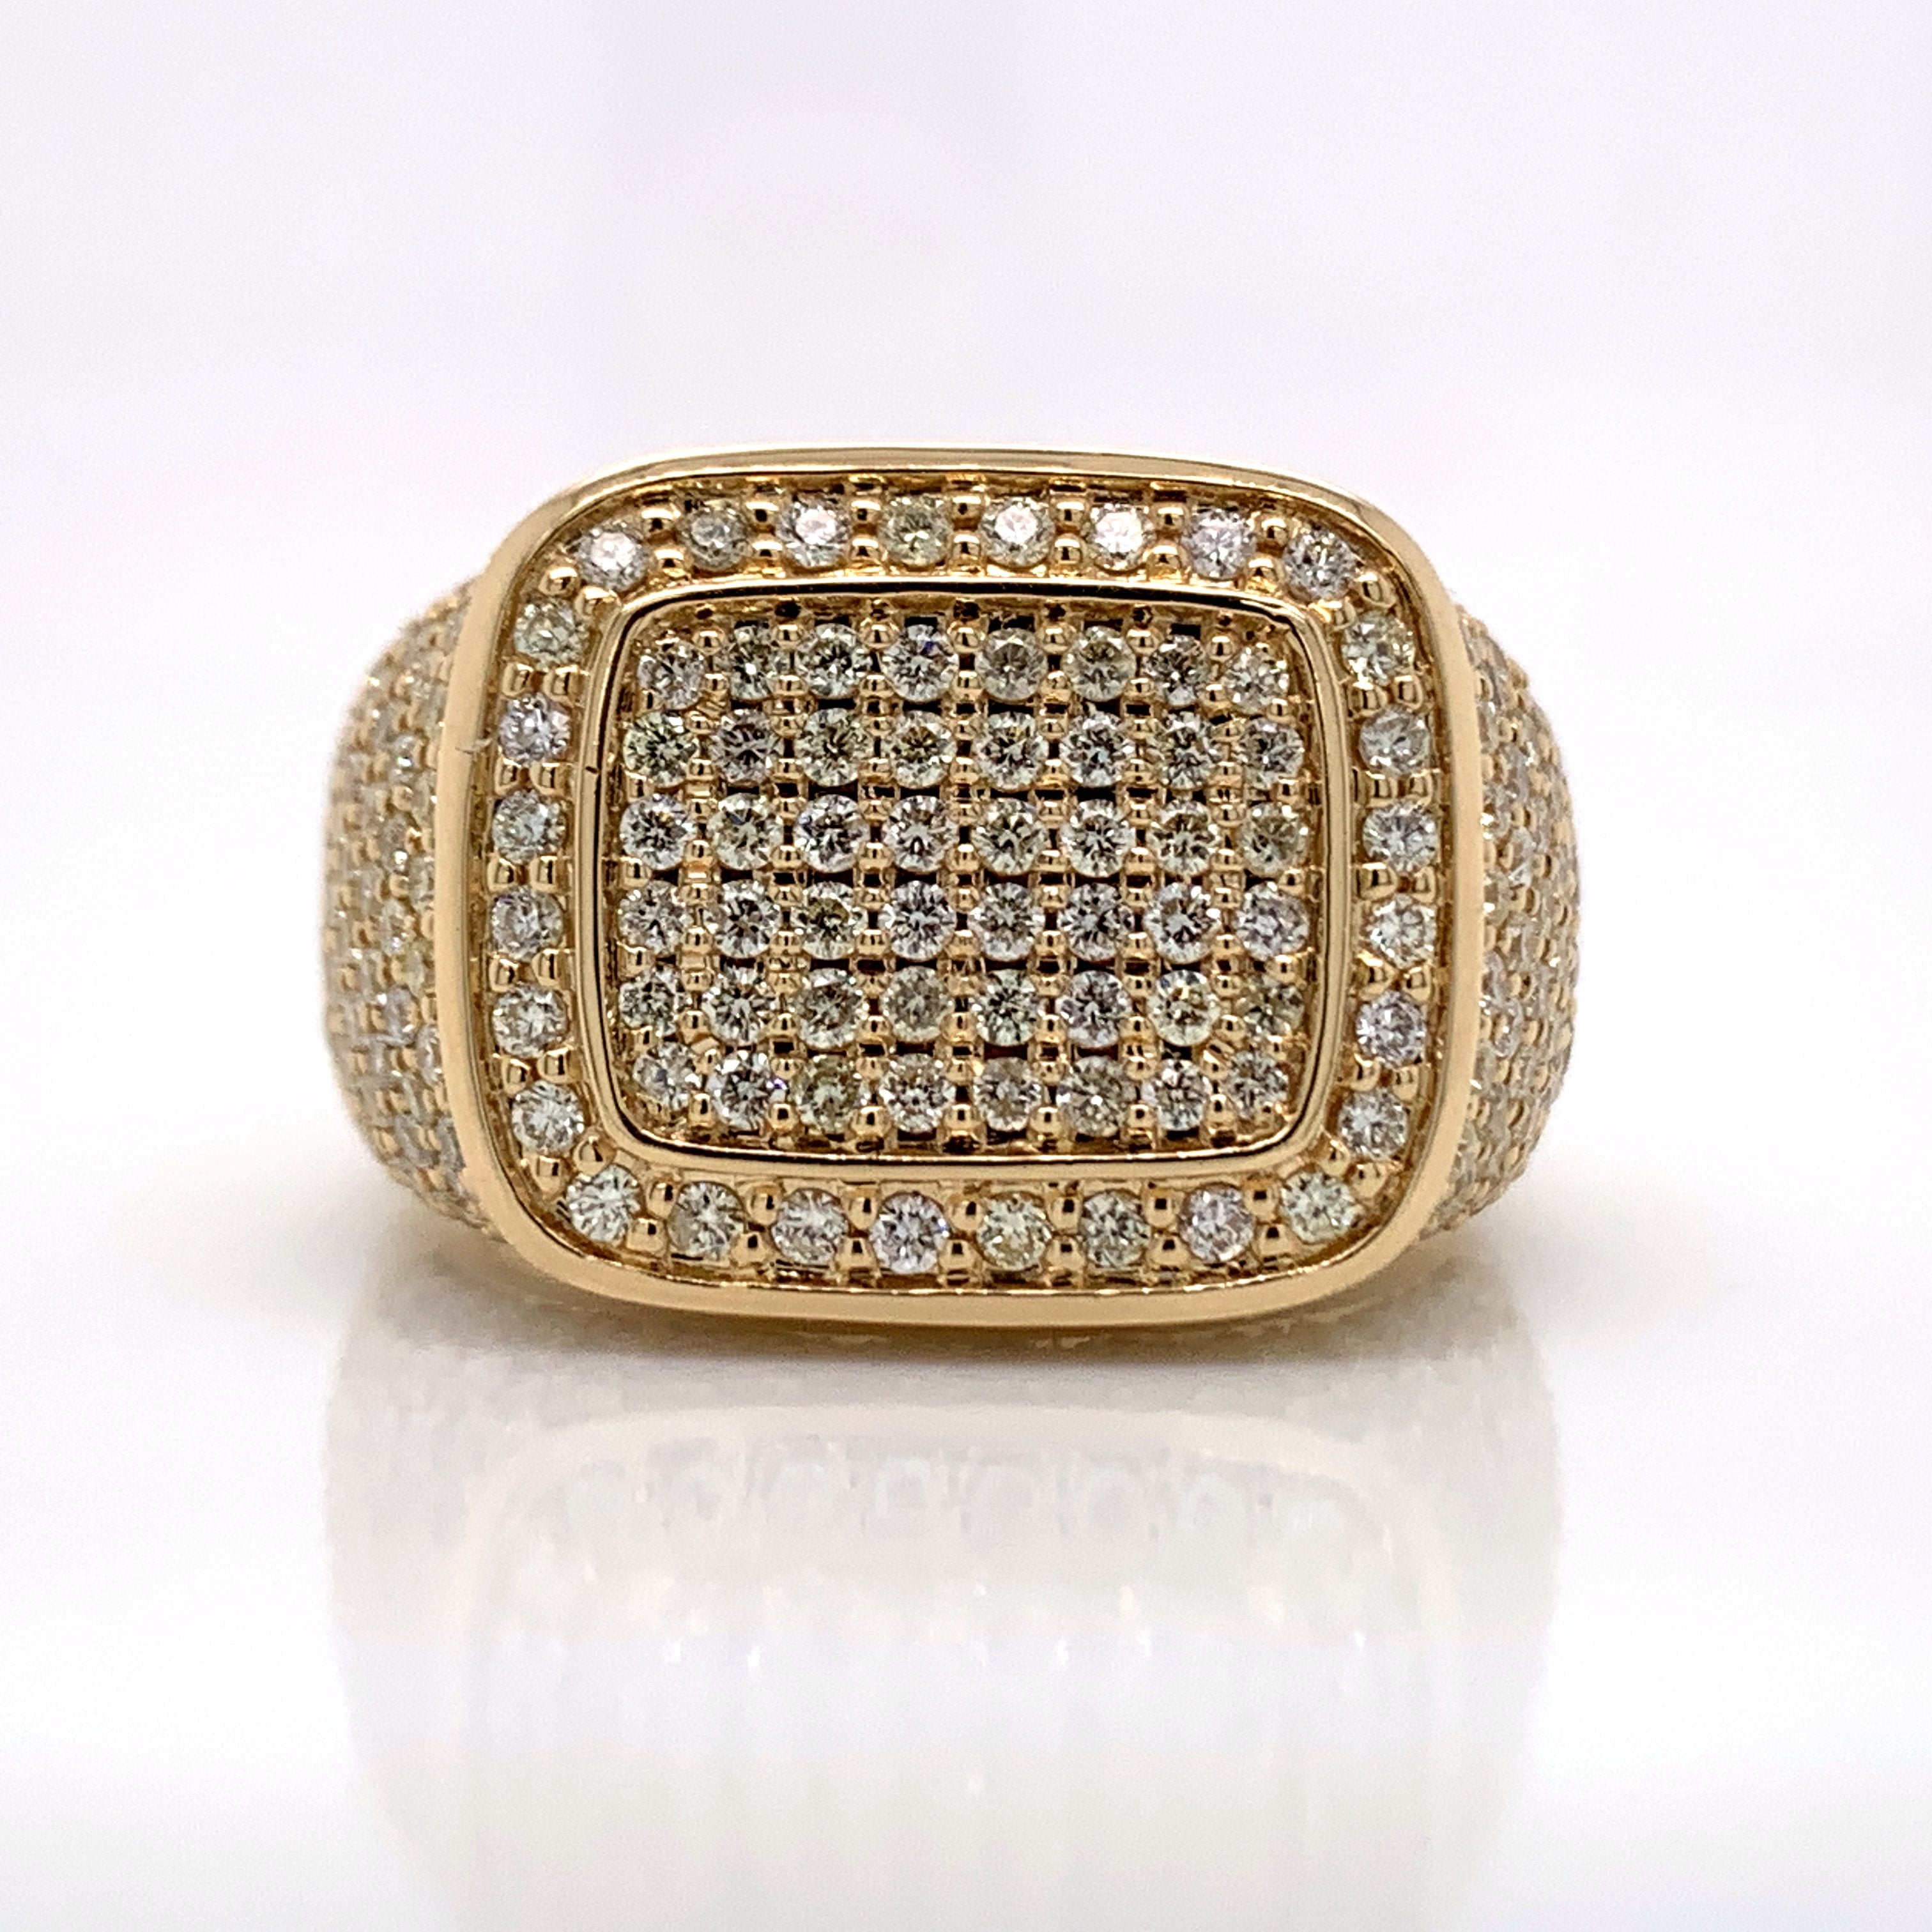 3.00 CT. Diamond Ring in 14K Gold - White Carat Diamonds 